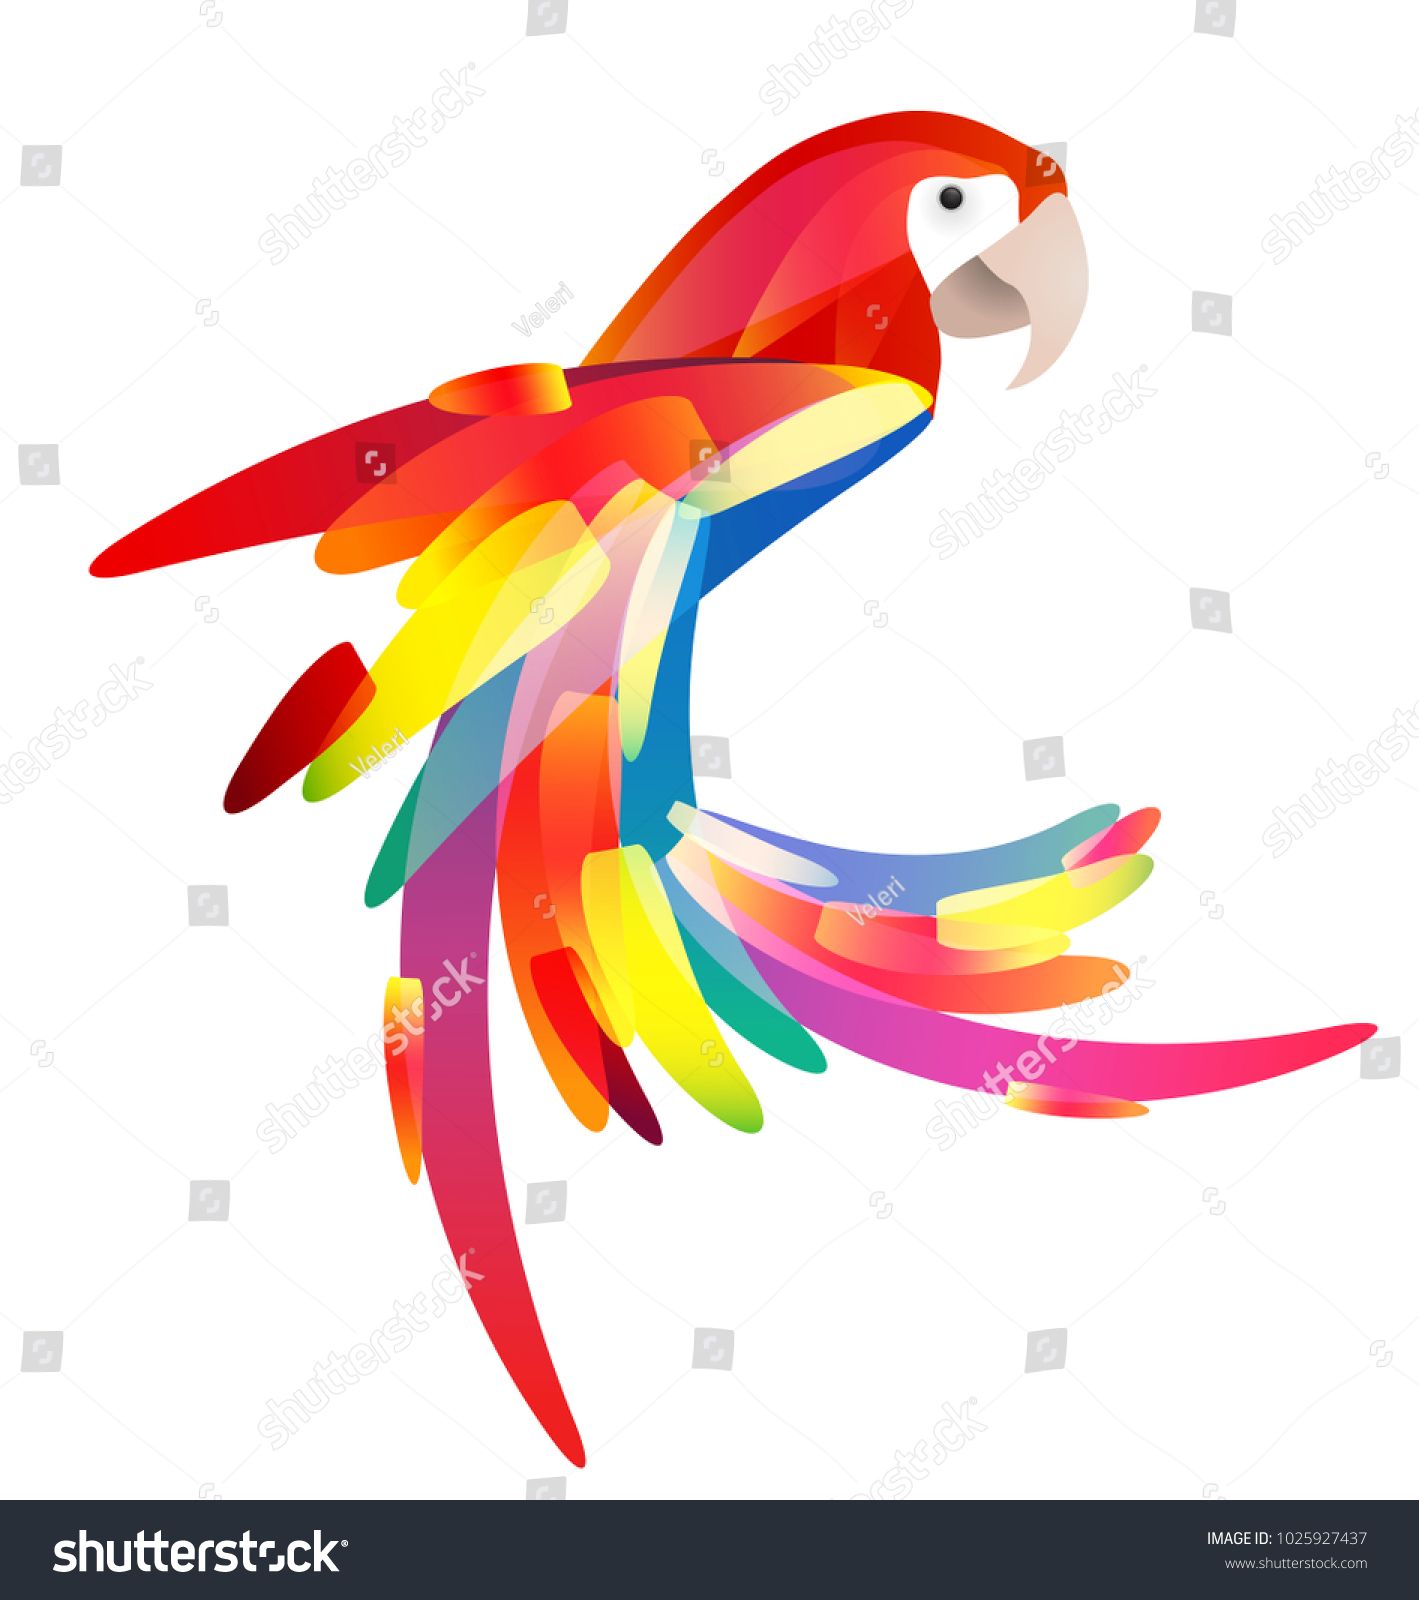 Parrot Graphic